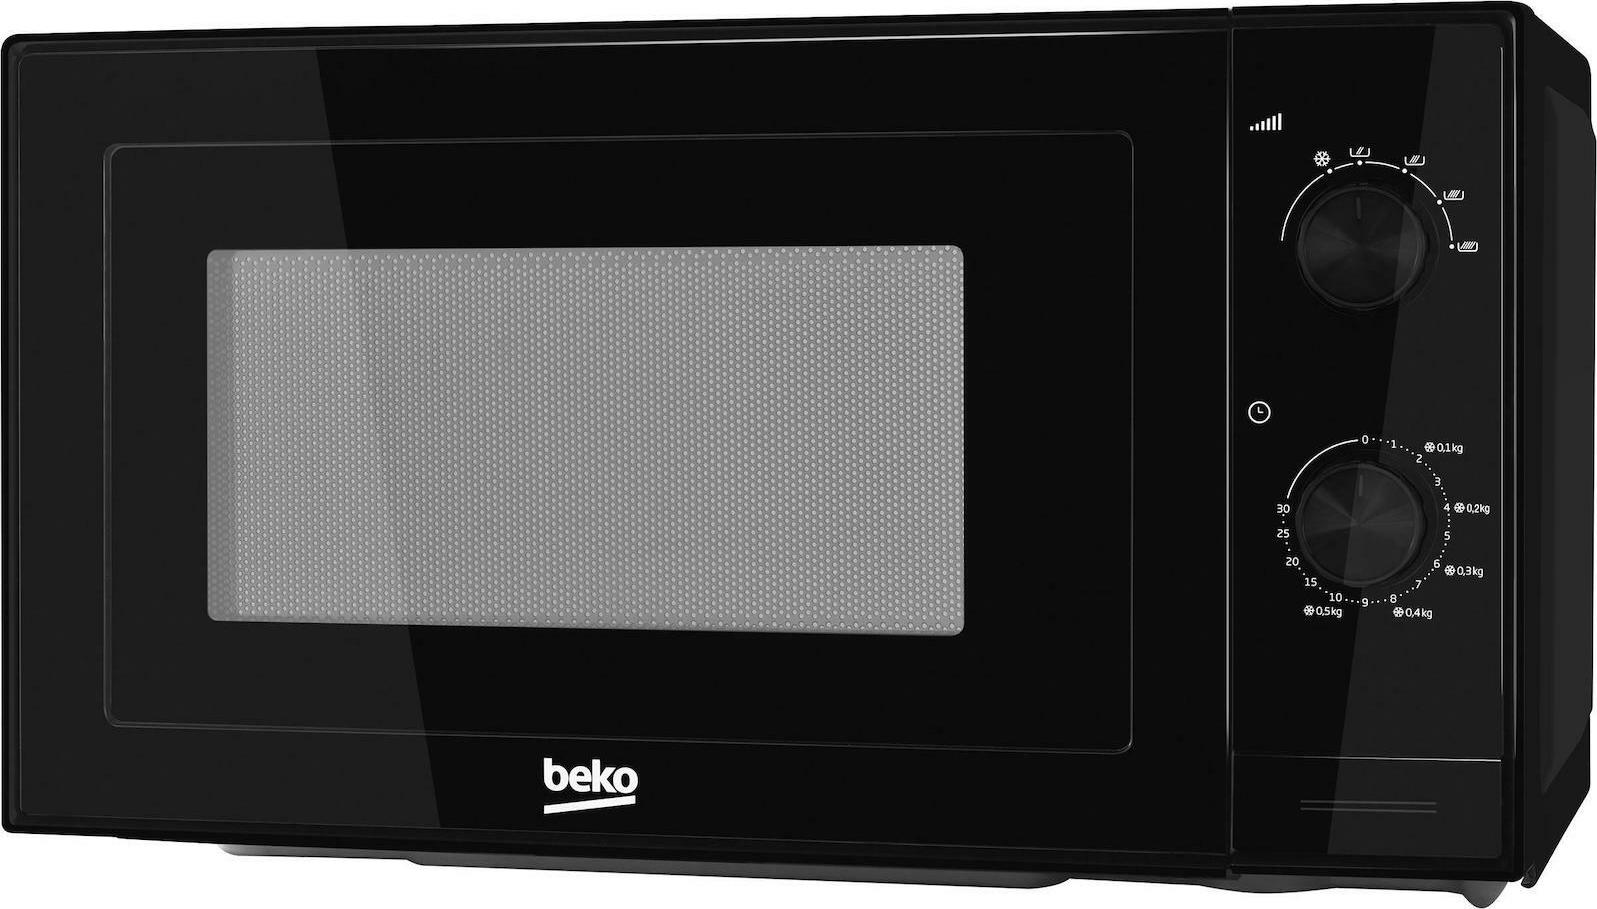 Beko MOC20100S 700w Microwave in Silver